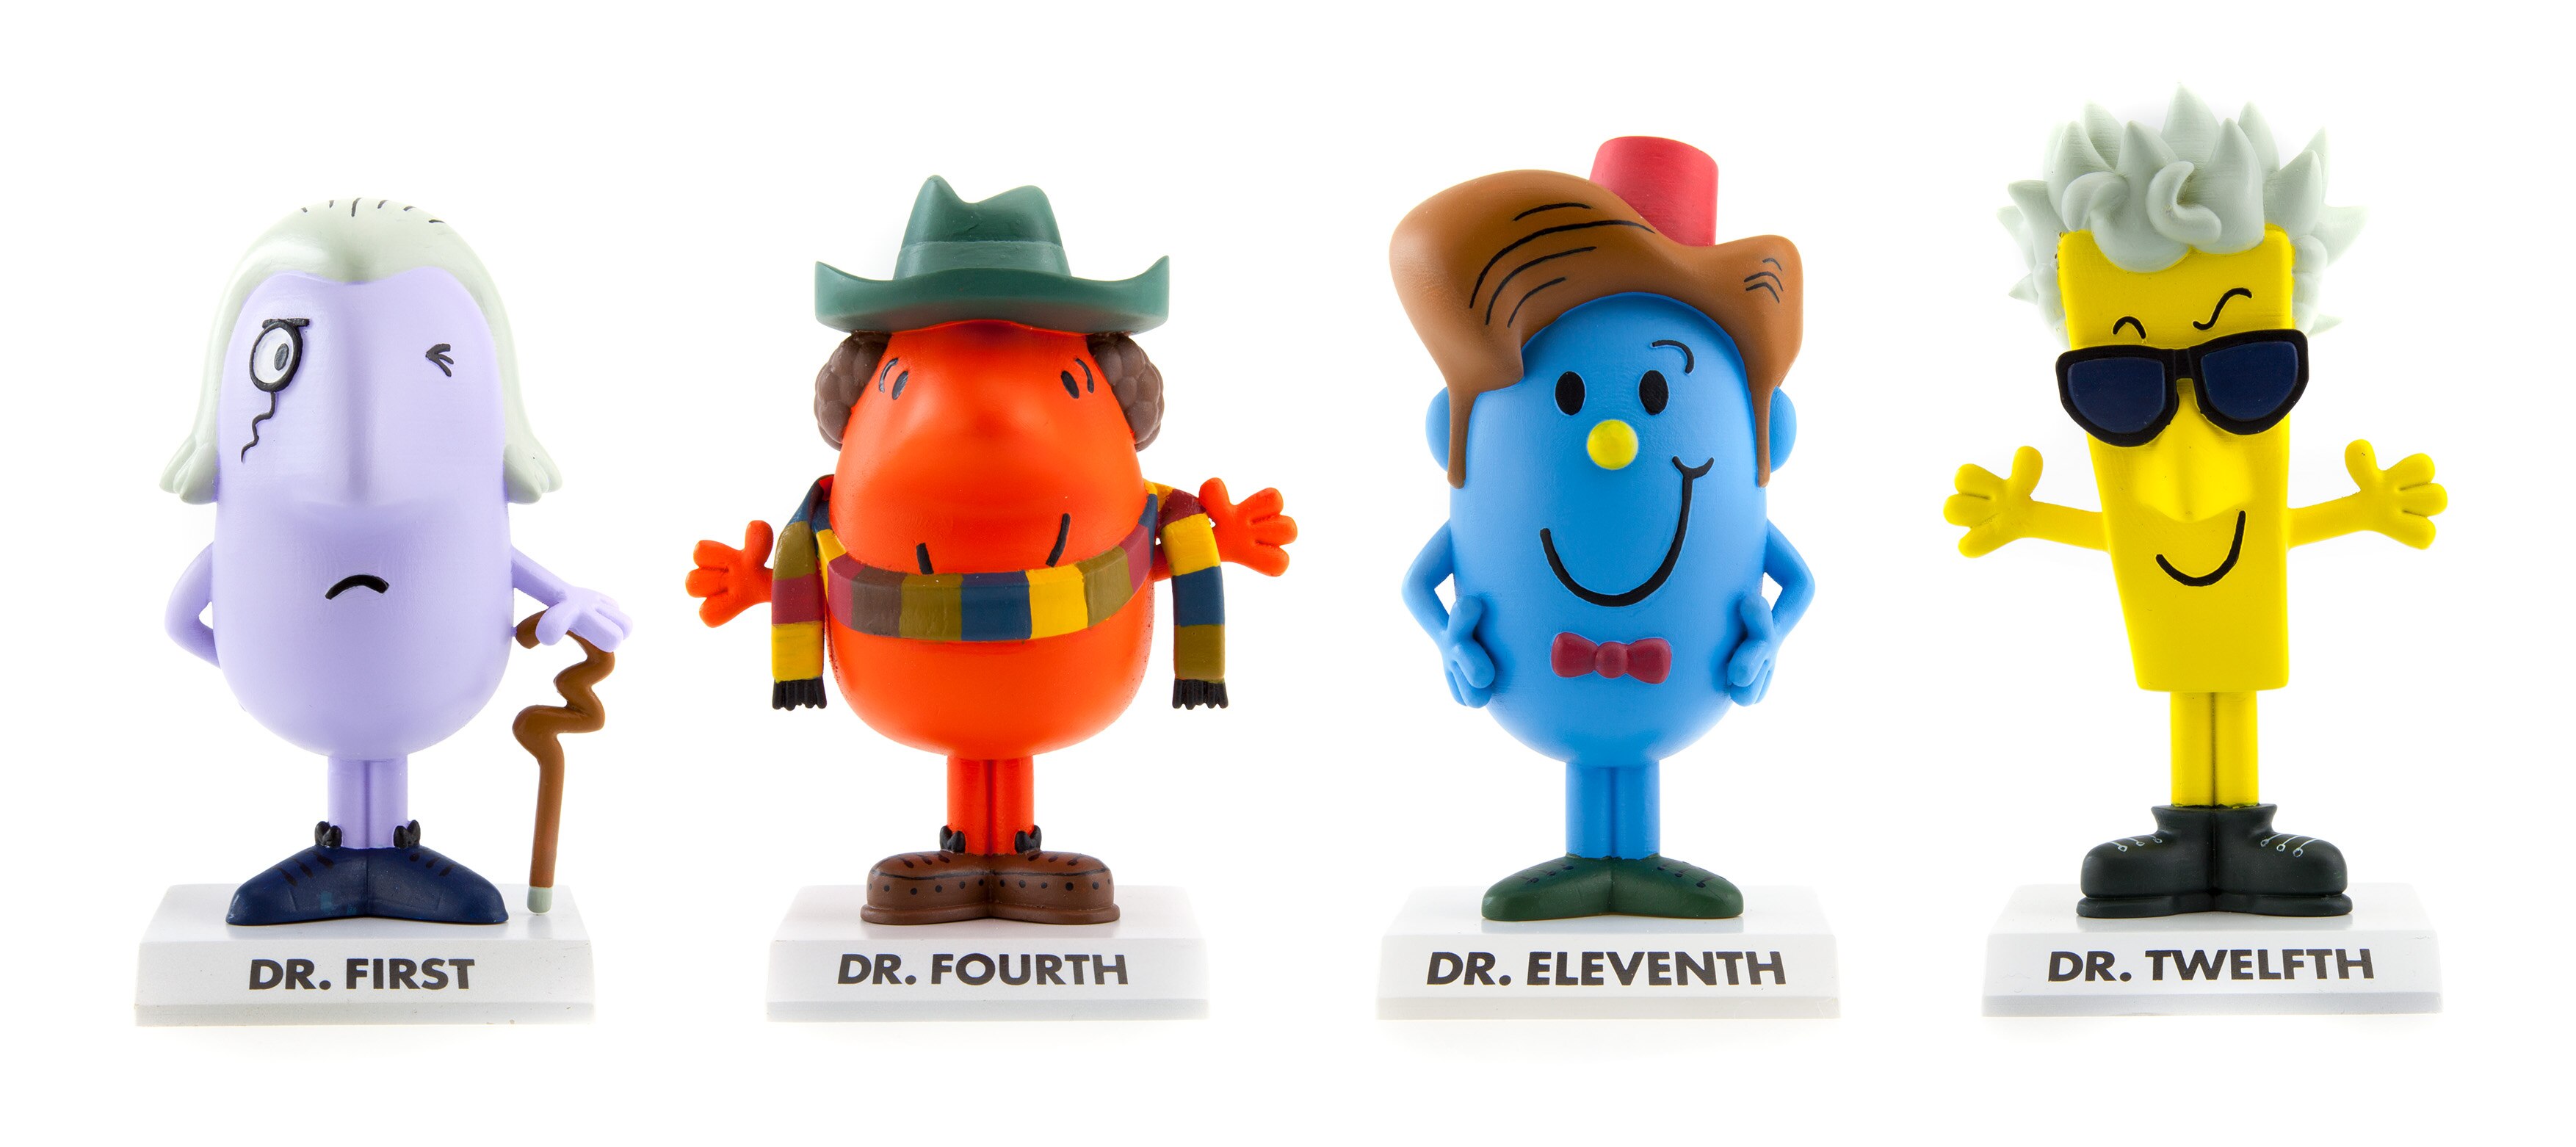 Image of four Dr. Men figurines